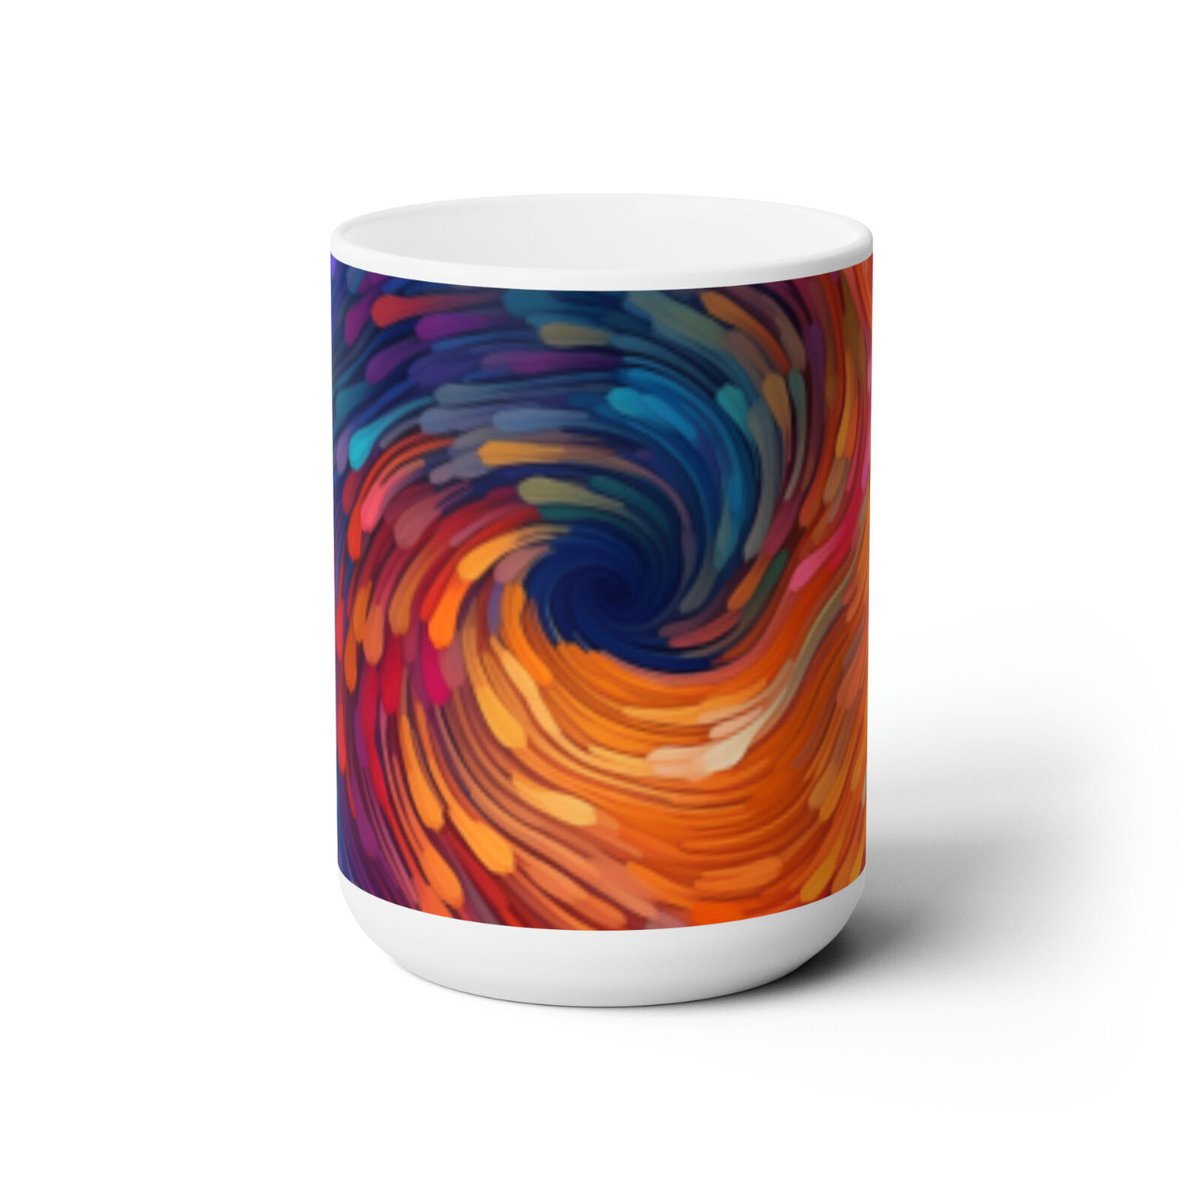 Ceramic Mug 15oz
i.mtr.cool/wxnfrjlczb

#CeramicMug #15ozMug #Drinkware #CoffeeMug #TeaMug #LargeMug #HomeDecor #GiftIdea #KitchenEssential #MugCollection